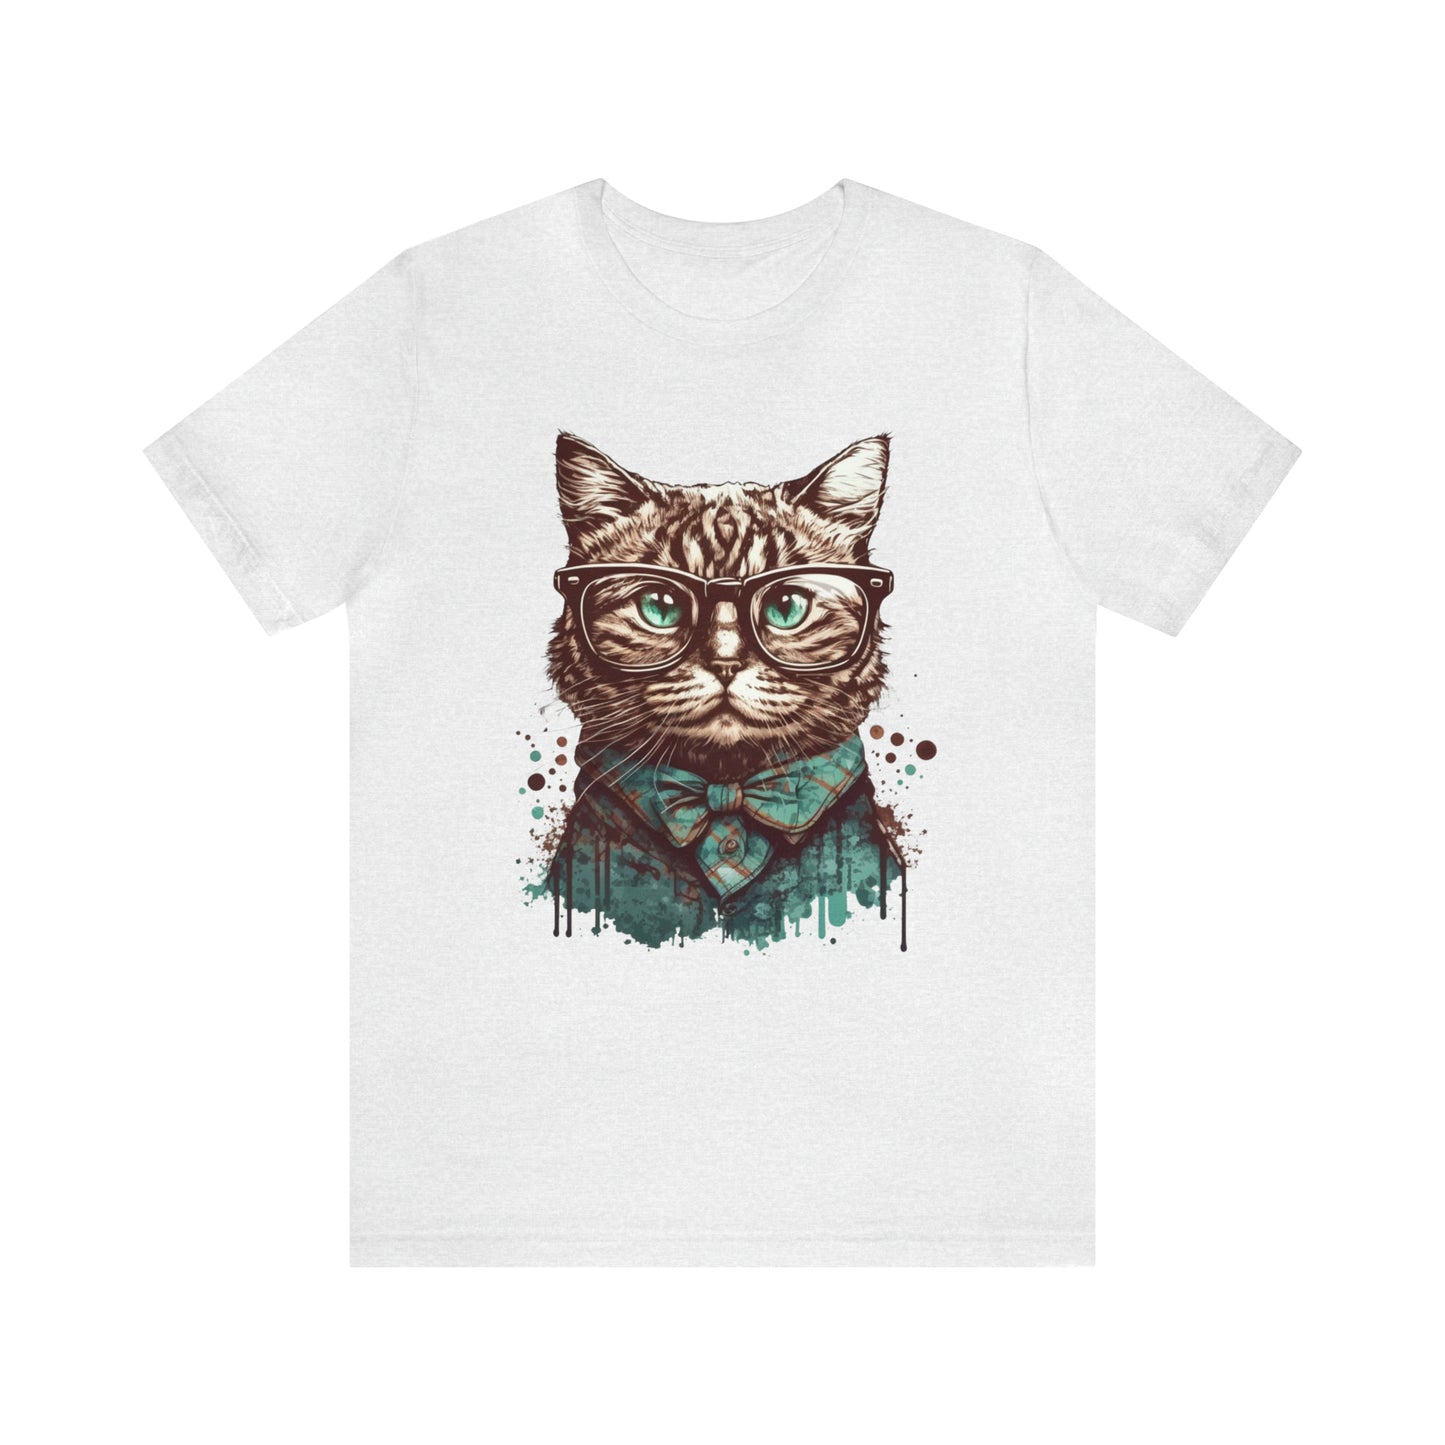 Nerdy cat T-shirt